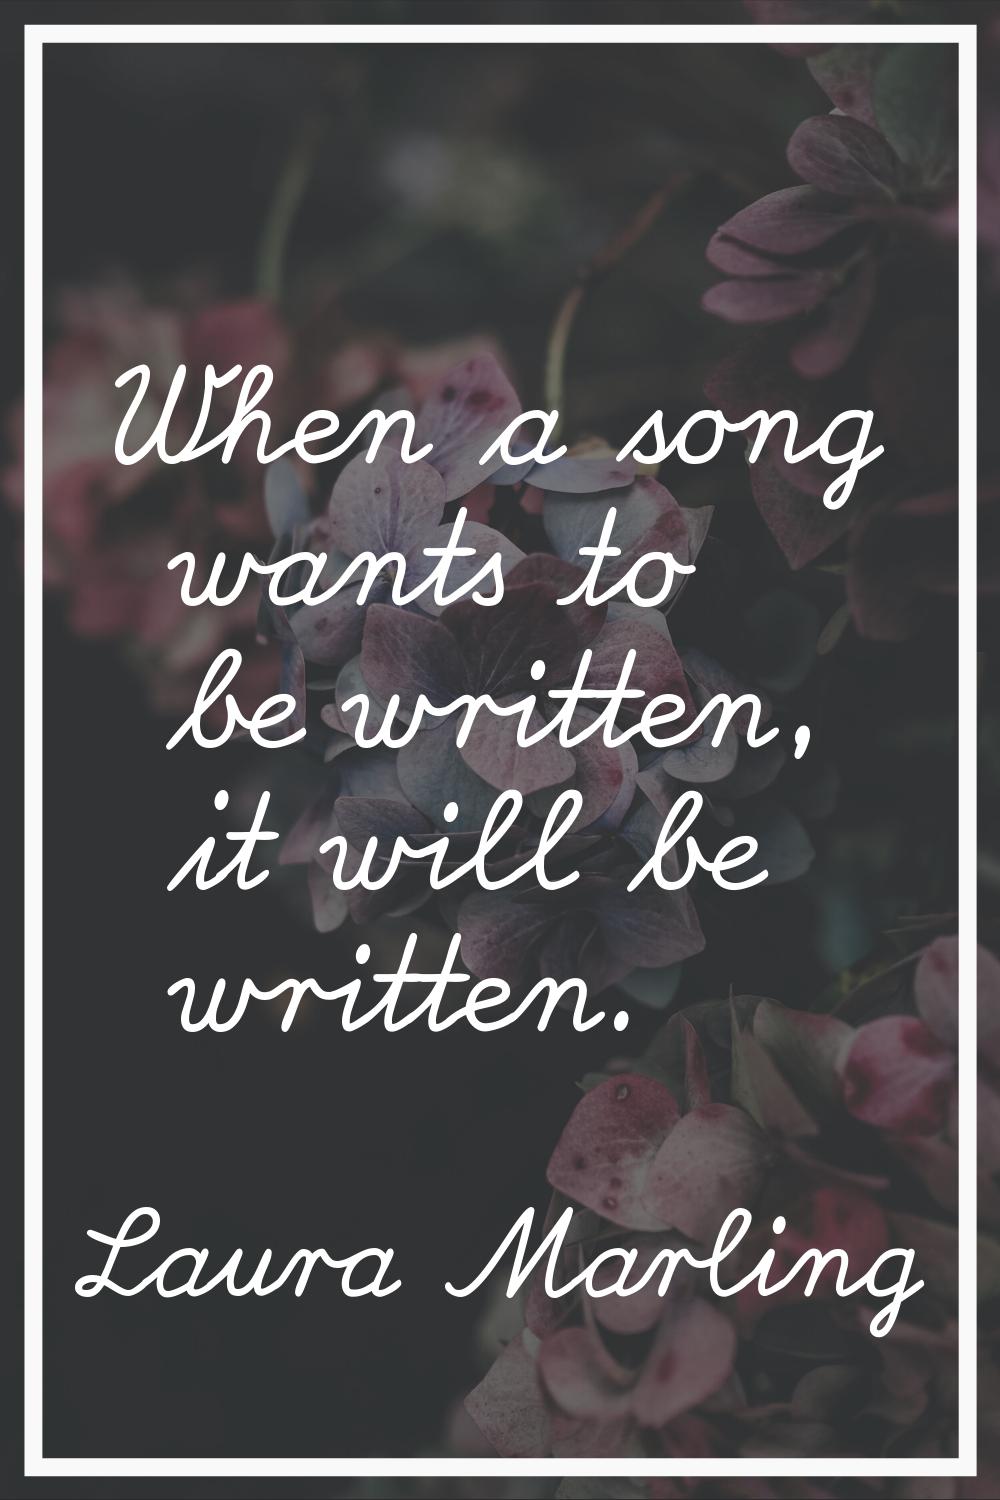 When a song wants to be written, it will be written.